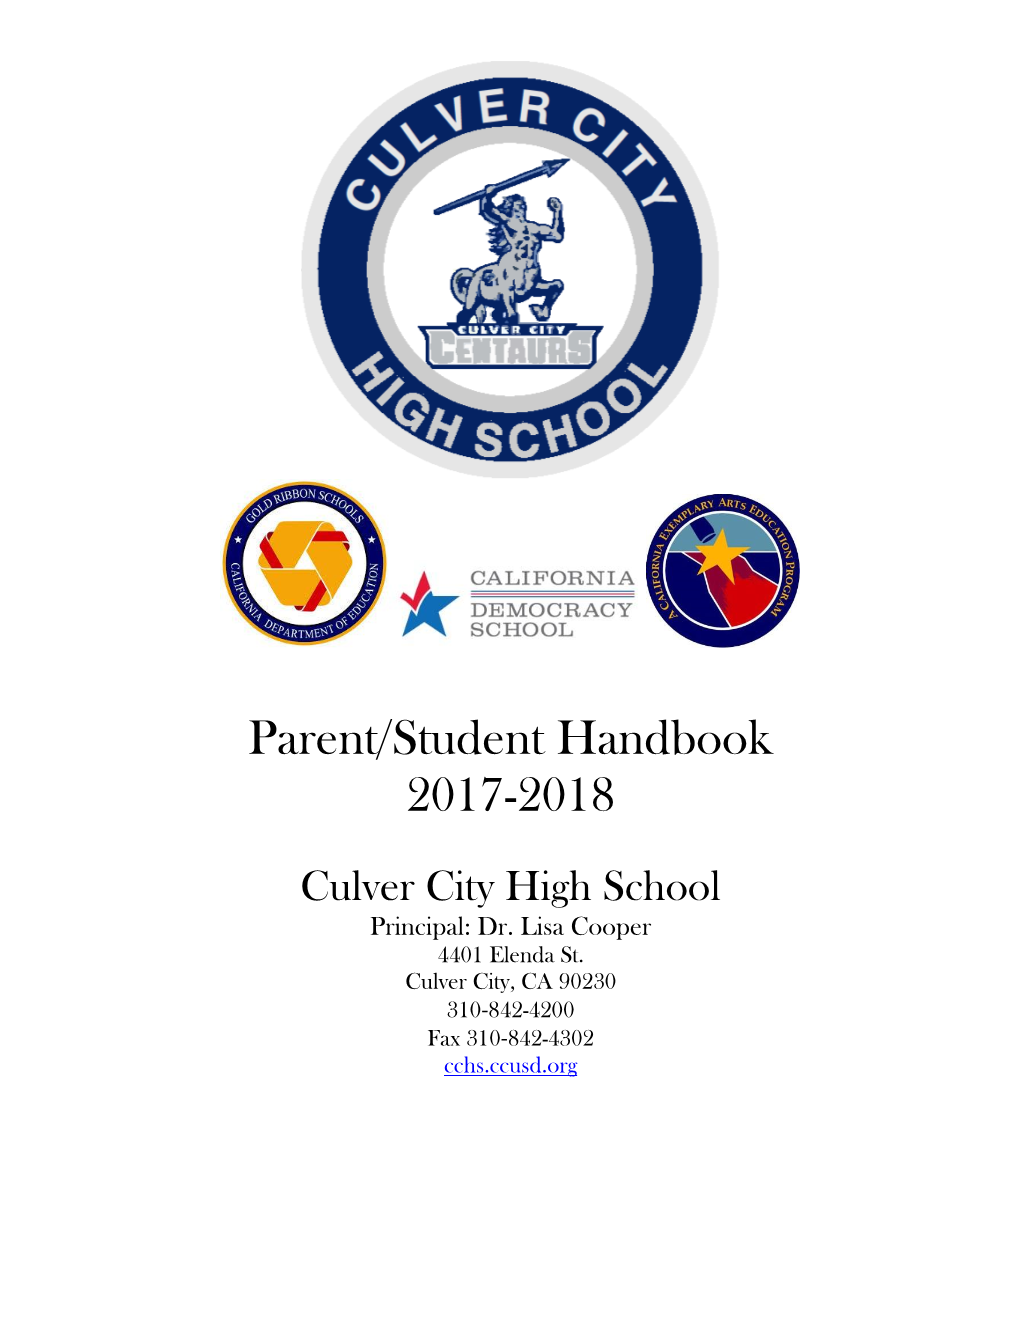 Parent/Student Handbook 2017-2018